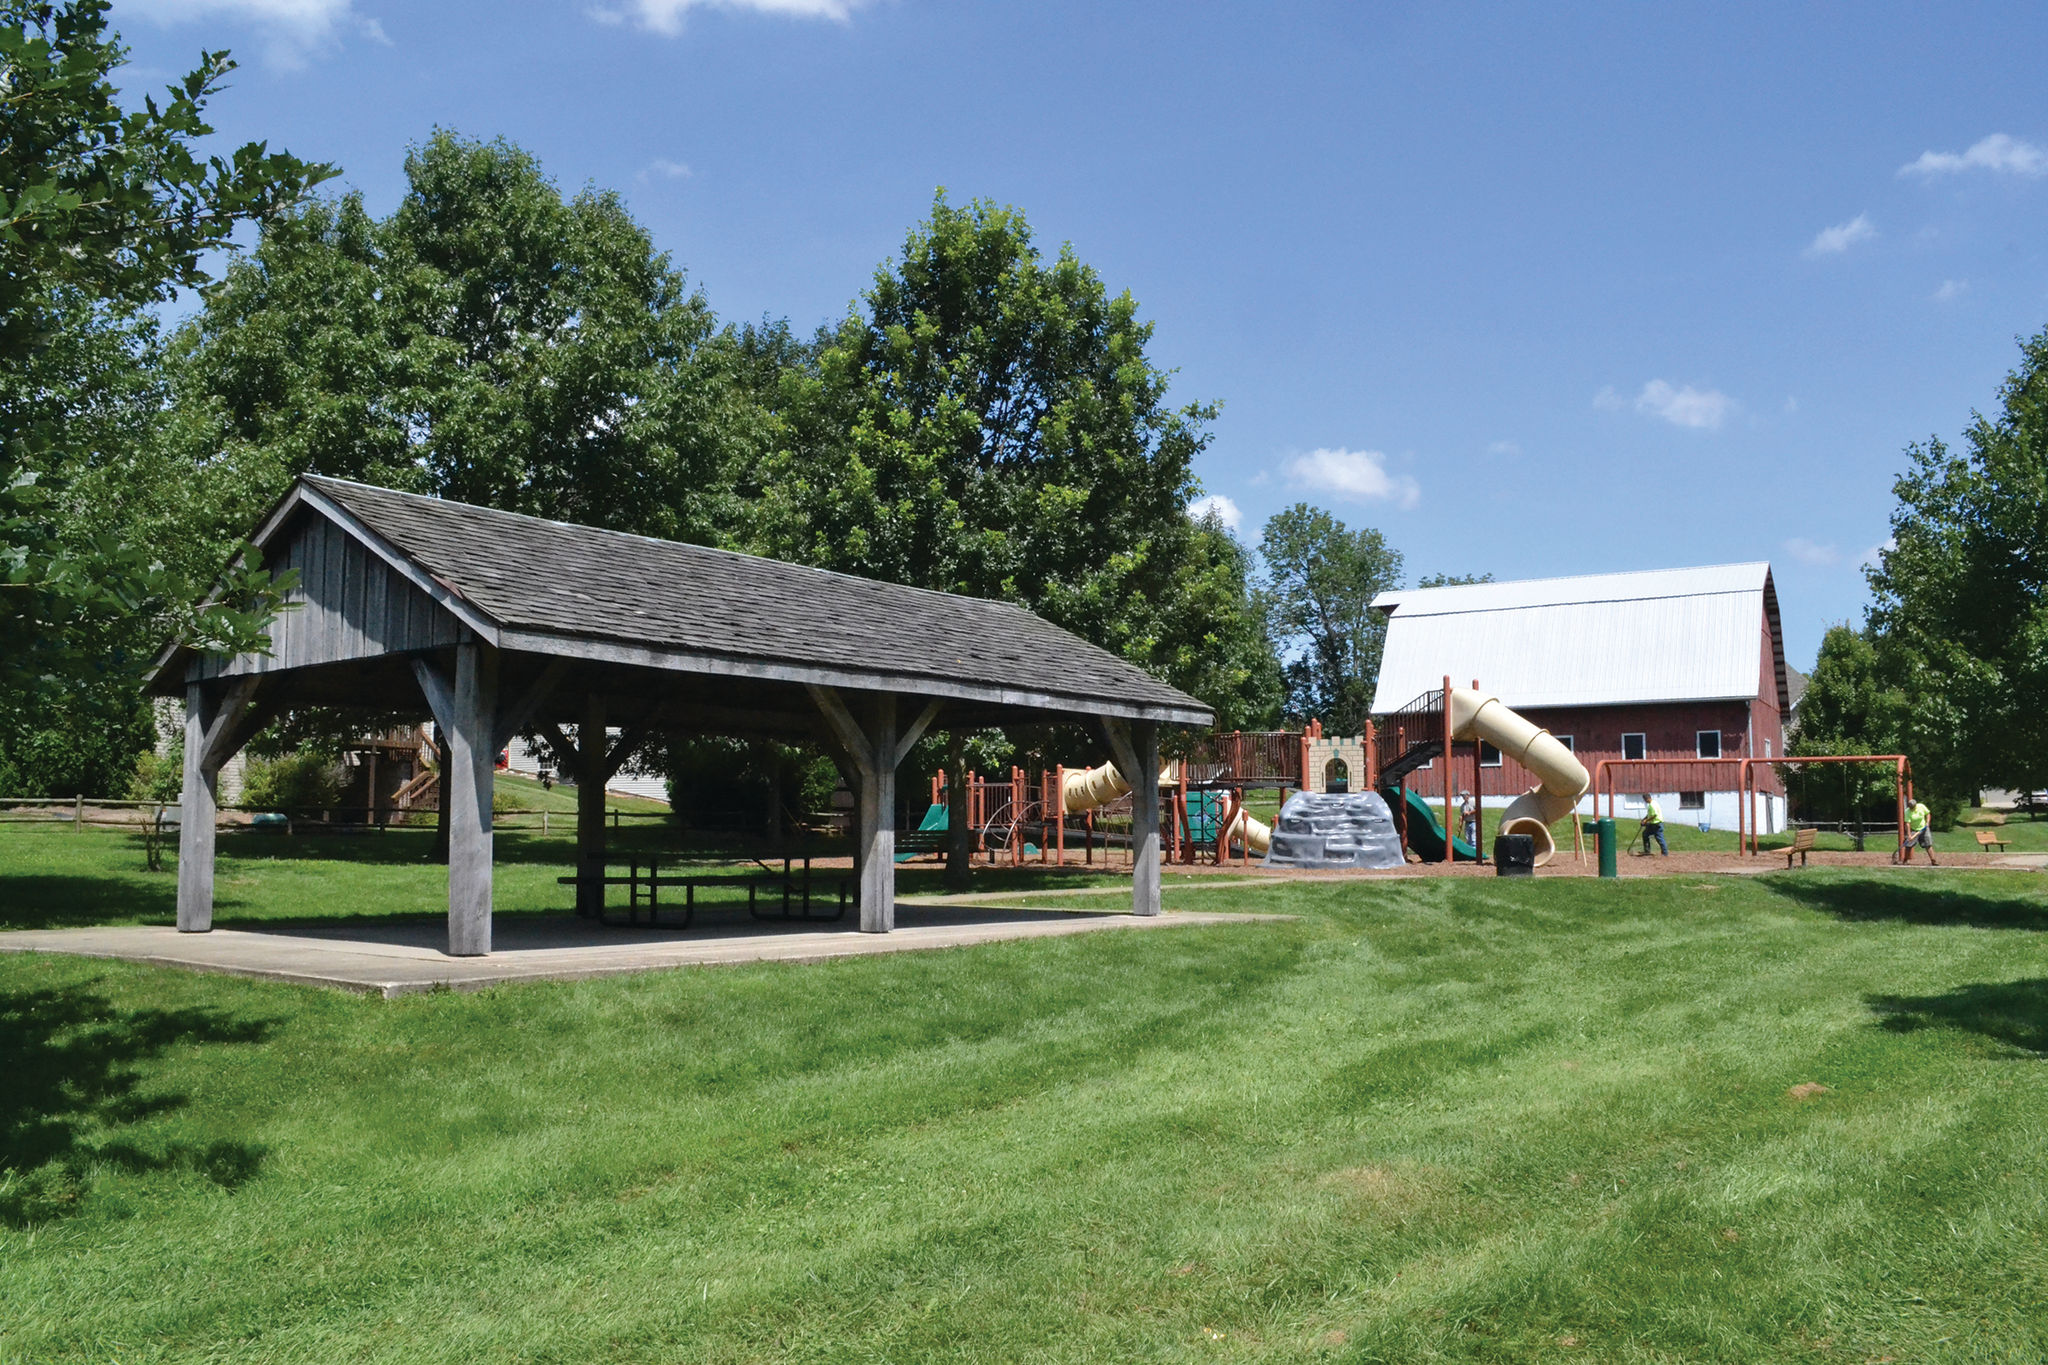 shelter and playground near the barn at Schmalz Farm Park